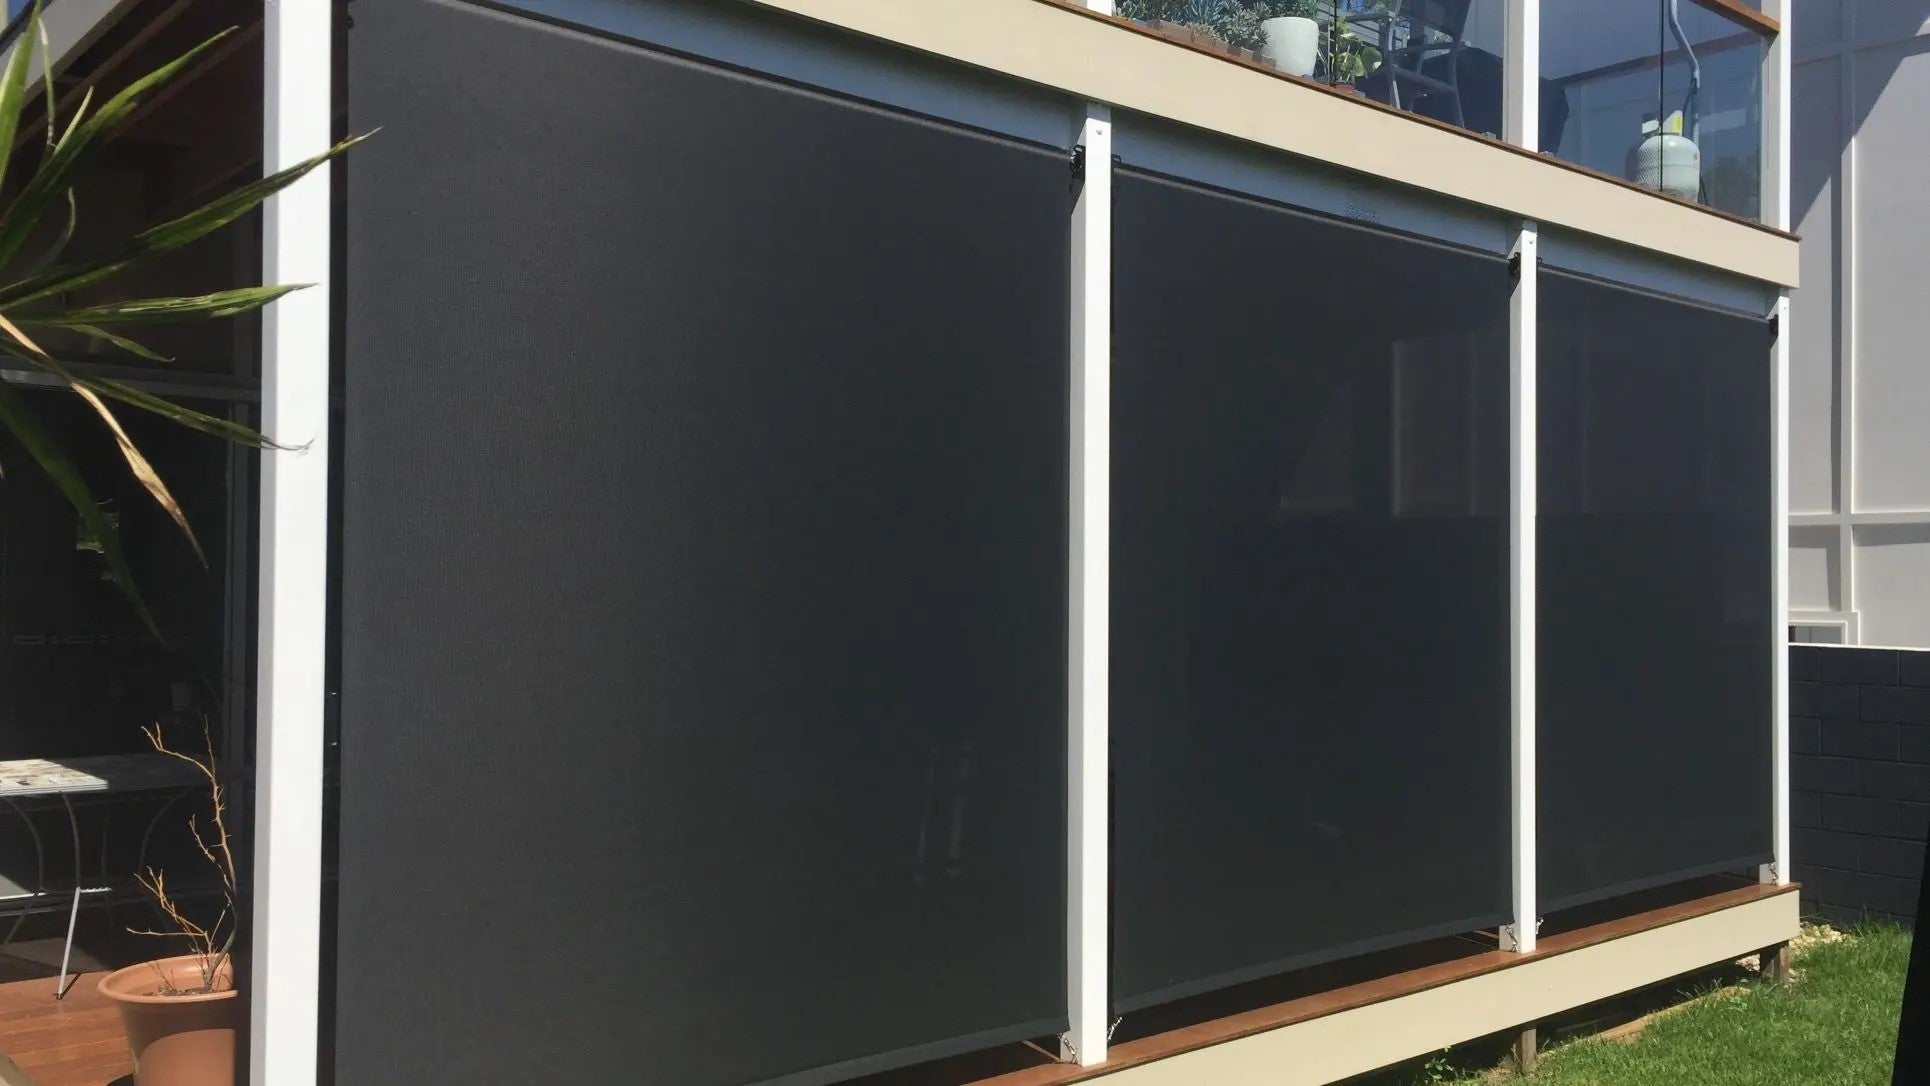 DIY installation of outdoor shade blinds